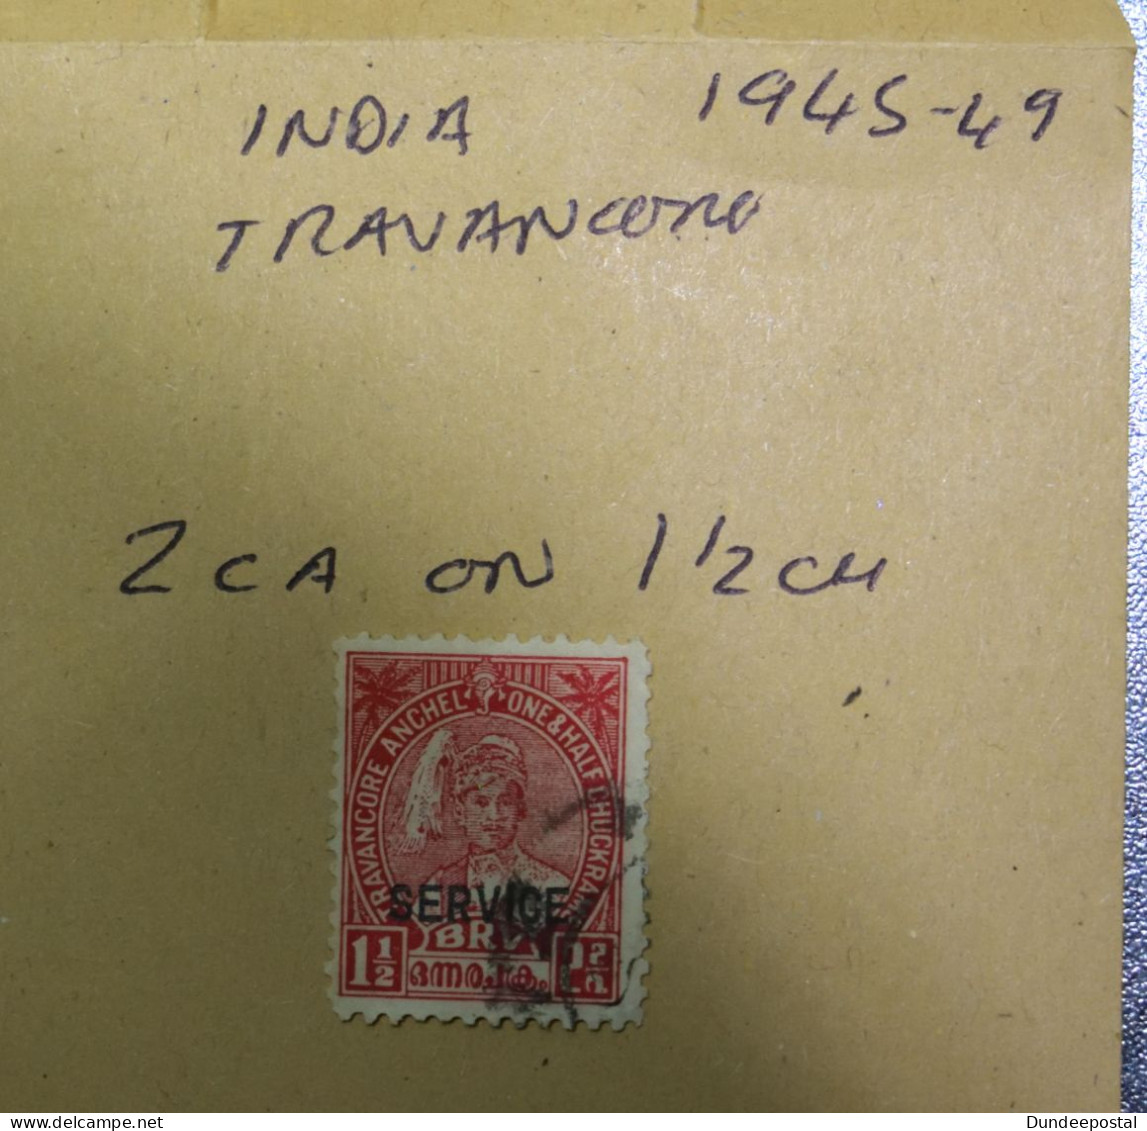 INDIA  STAMPS  Service   1945 - 49   (T9)   ~~L@@K~~ - Travancore